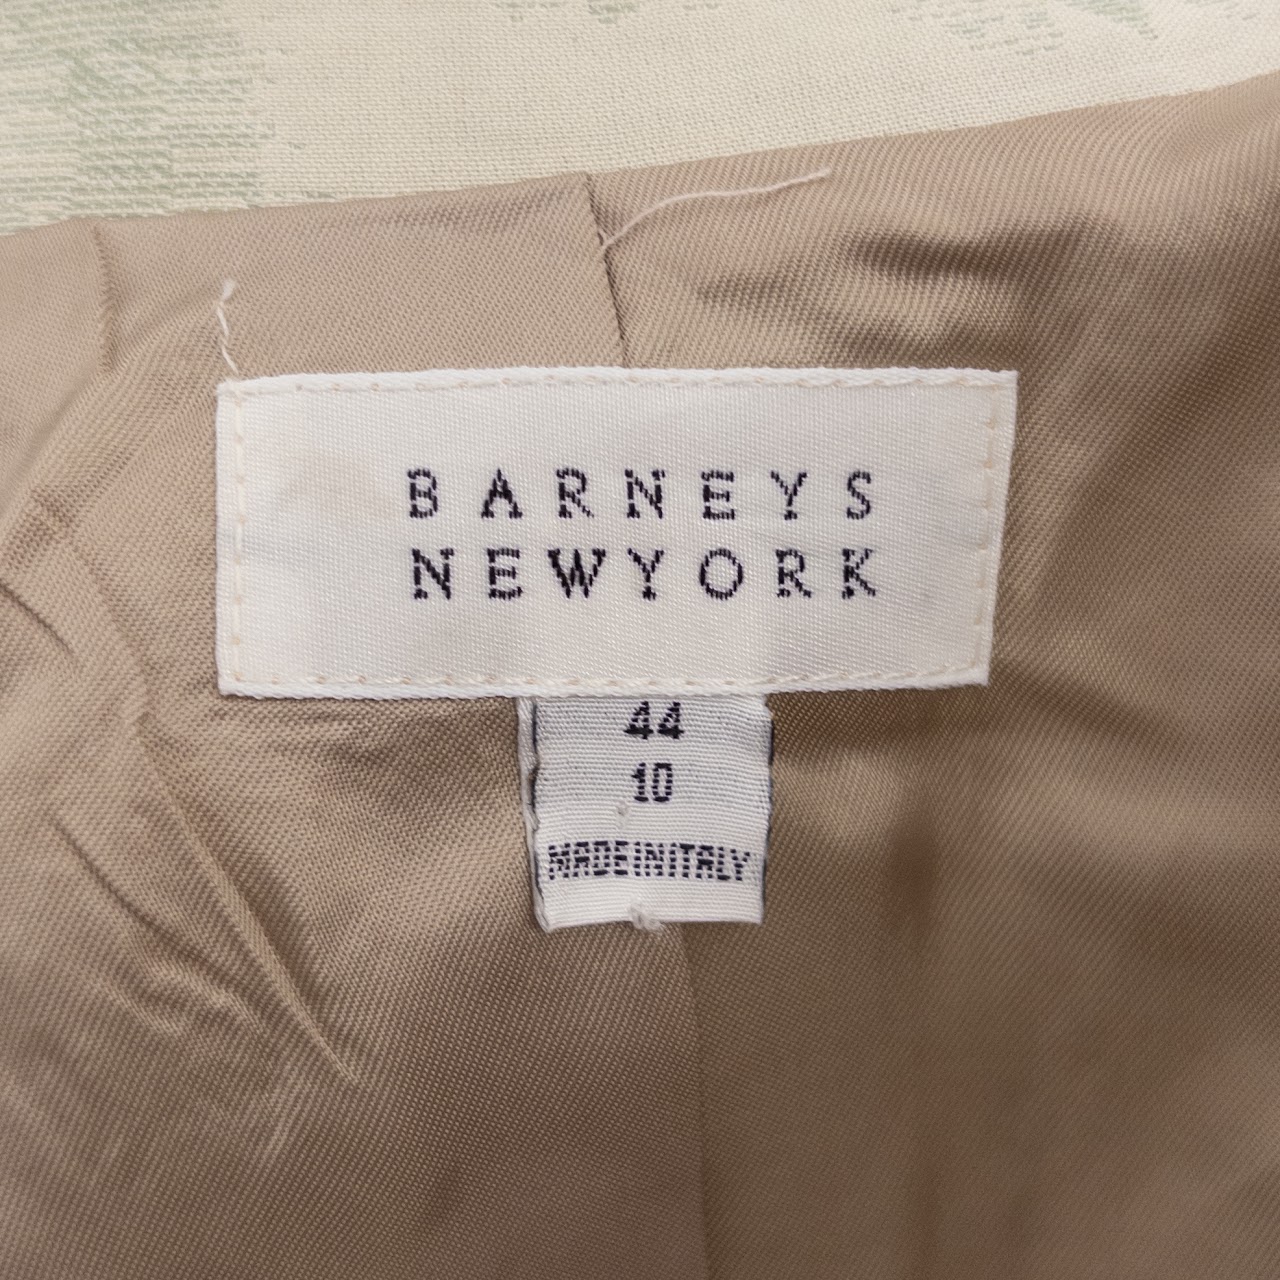 Barneys New York Floral Jacquard Suit